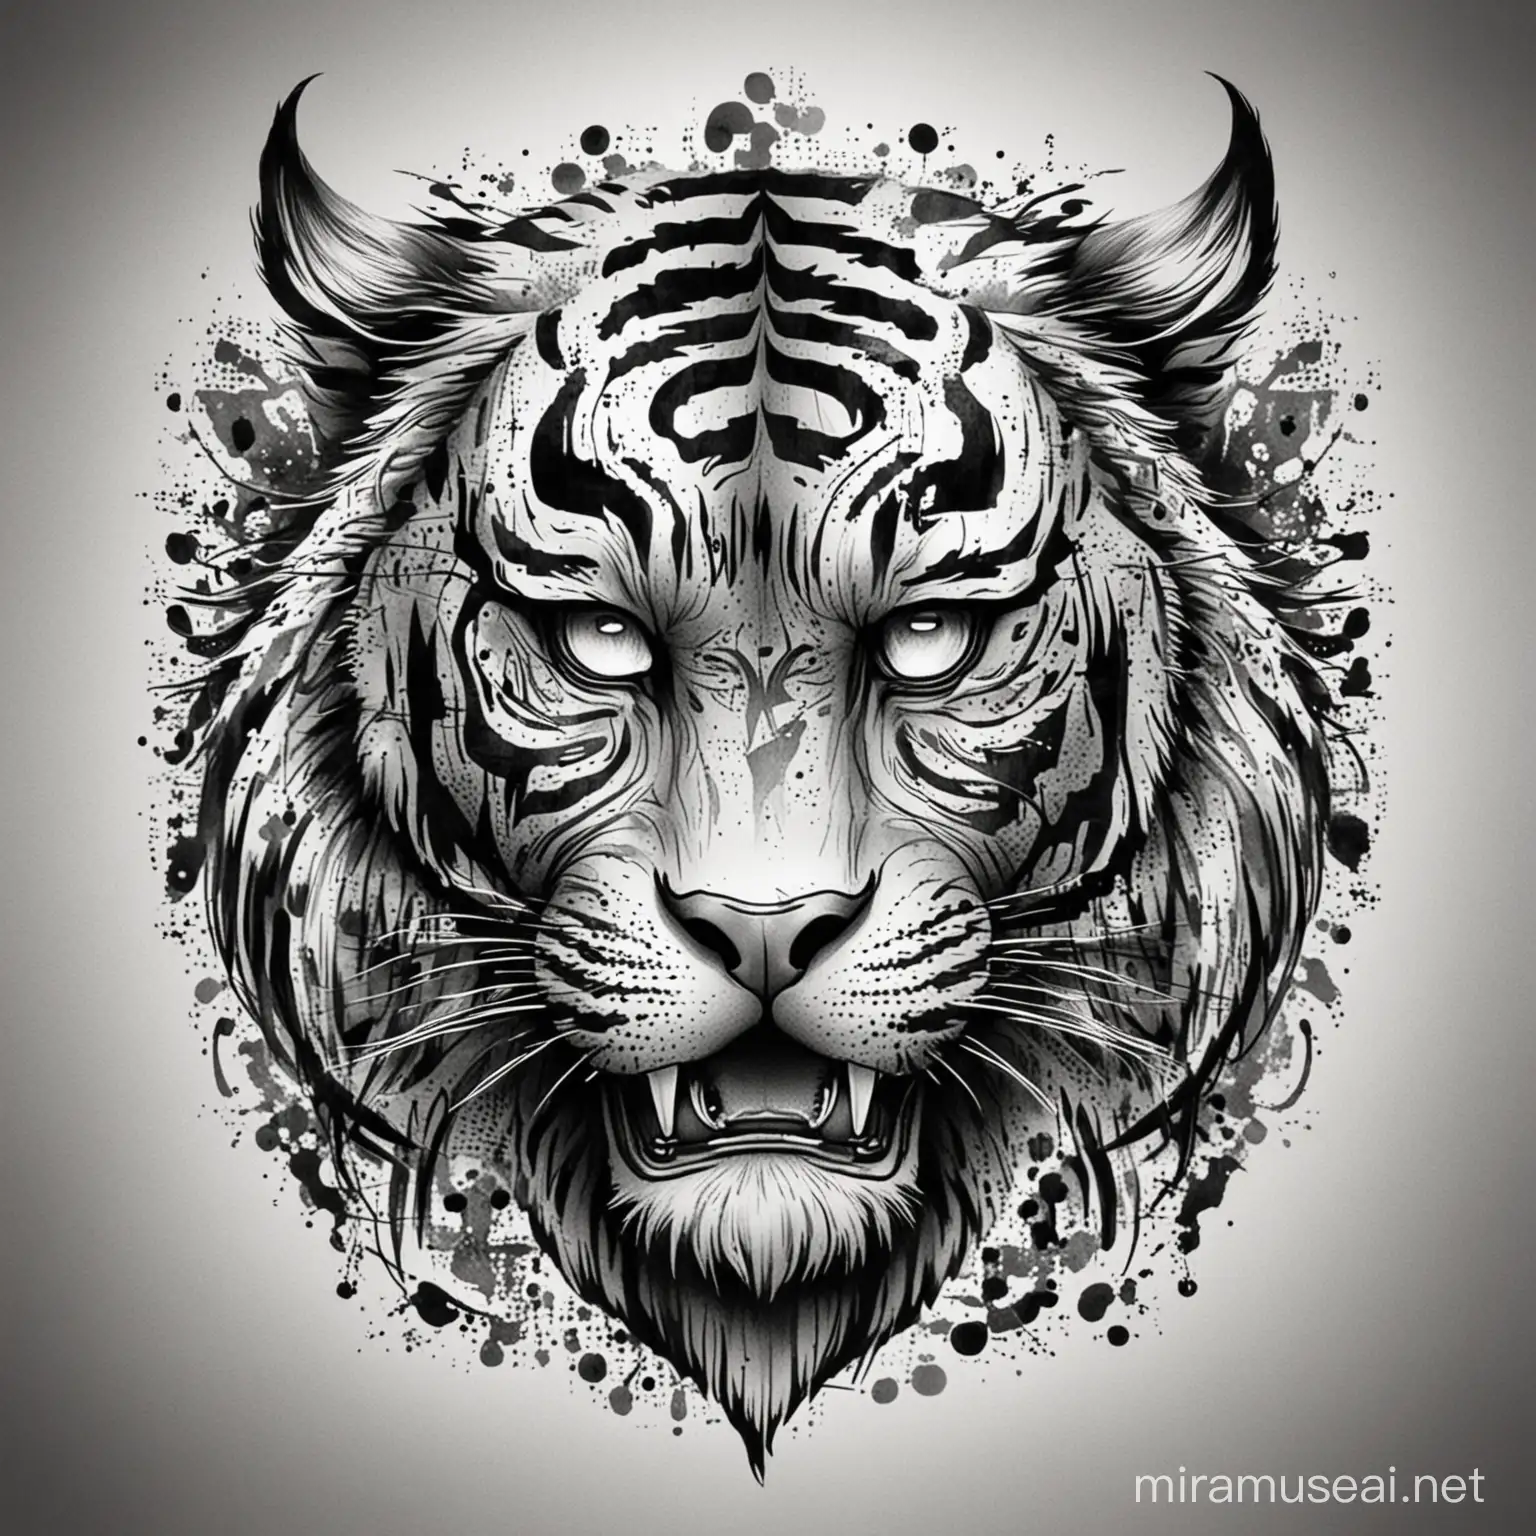 Comics Style Black and White Tiger Head Tattoo